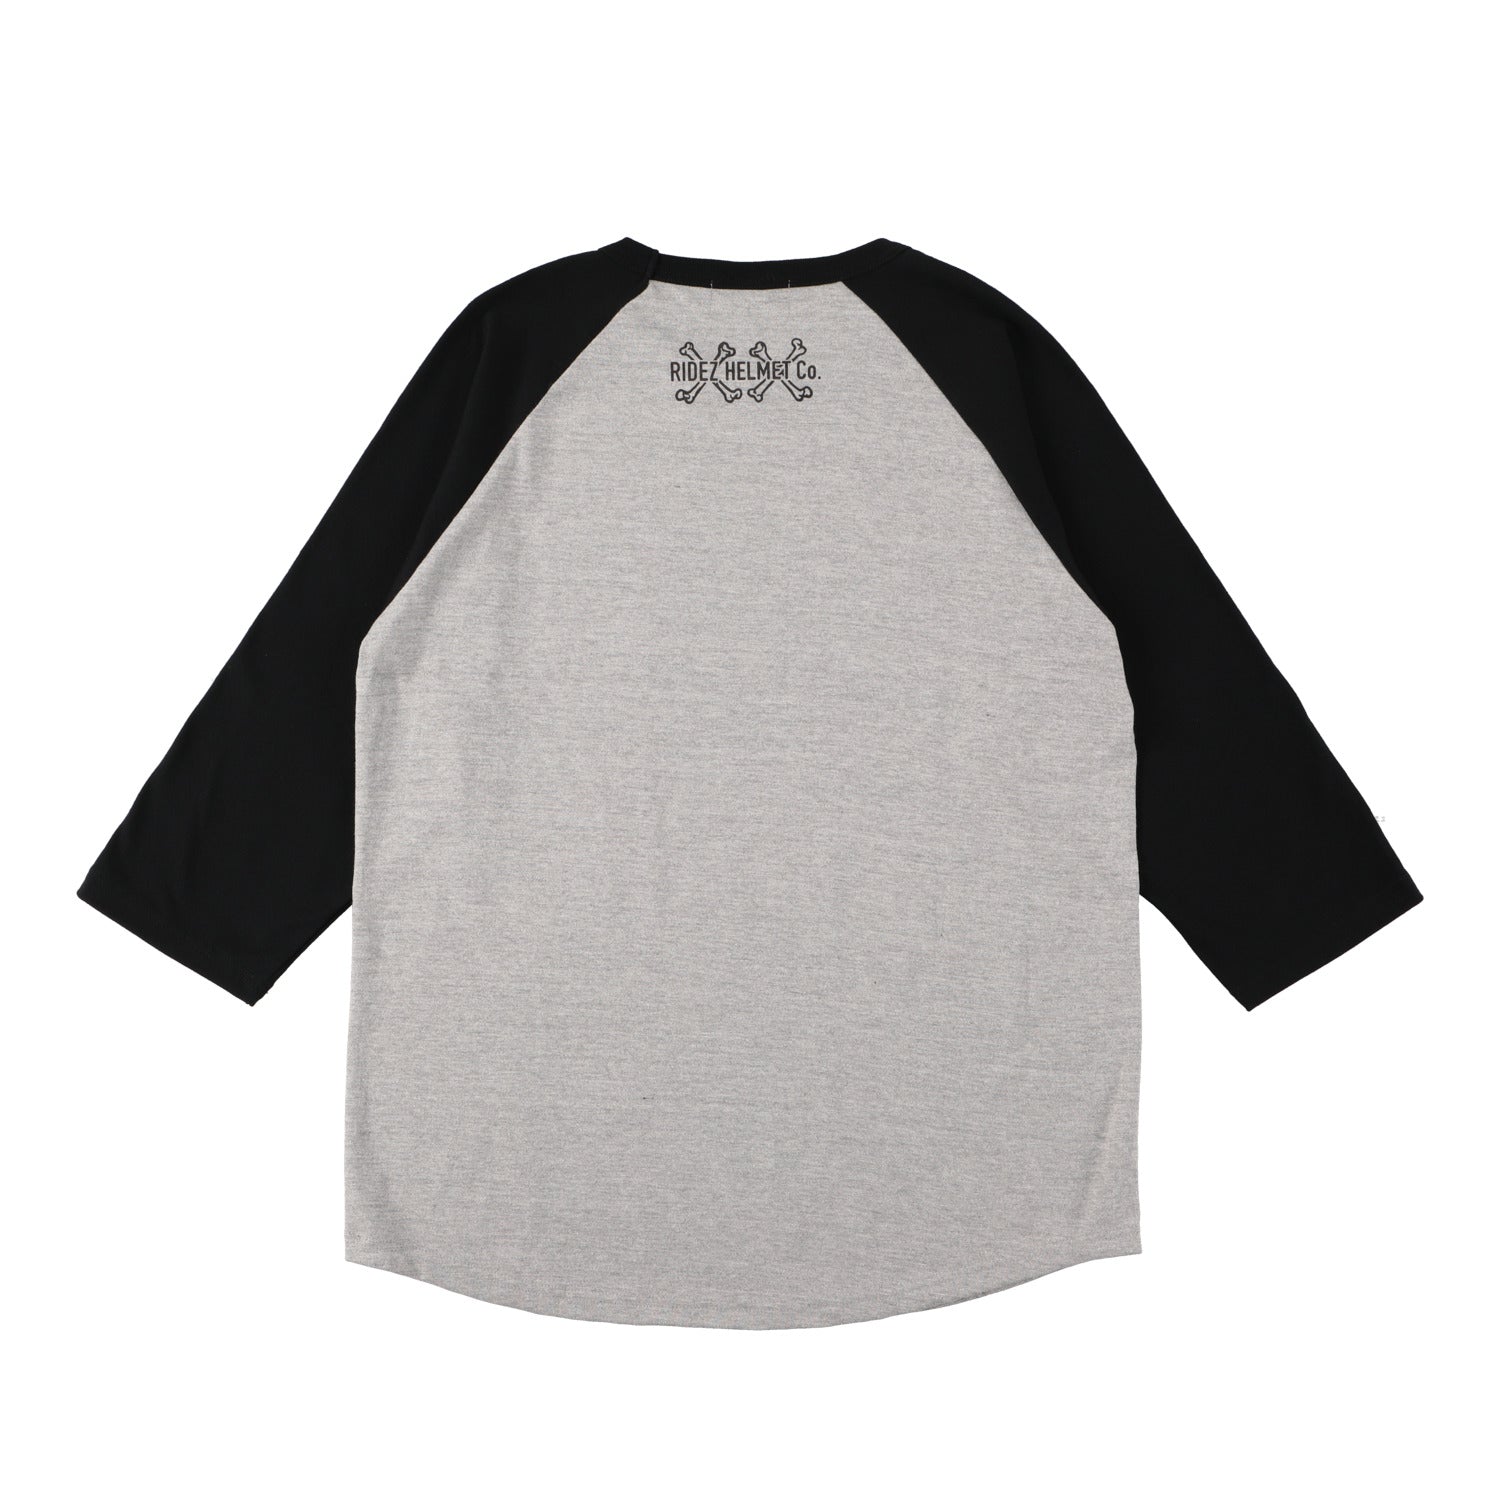 RIDEZ XX 3/4 袖 T 恤 RD7006 